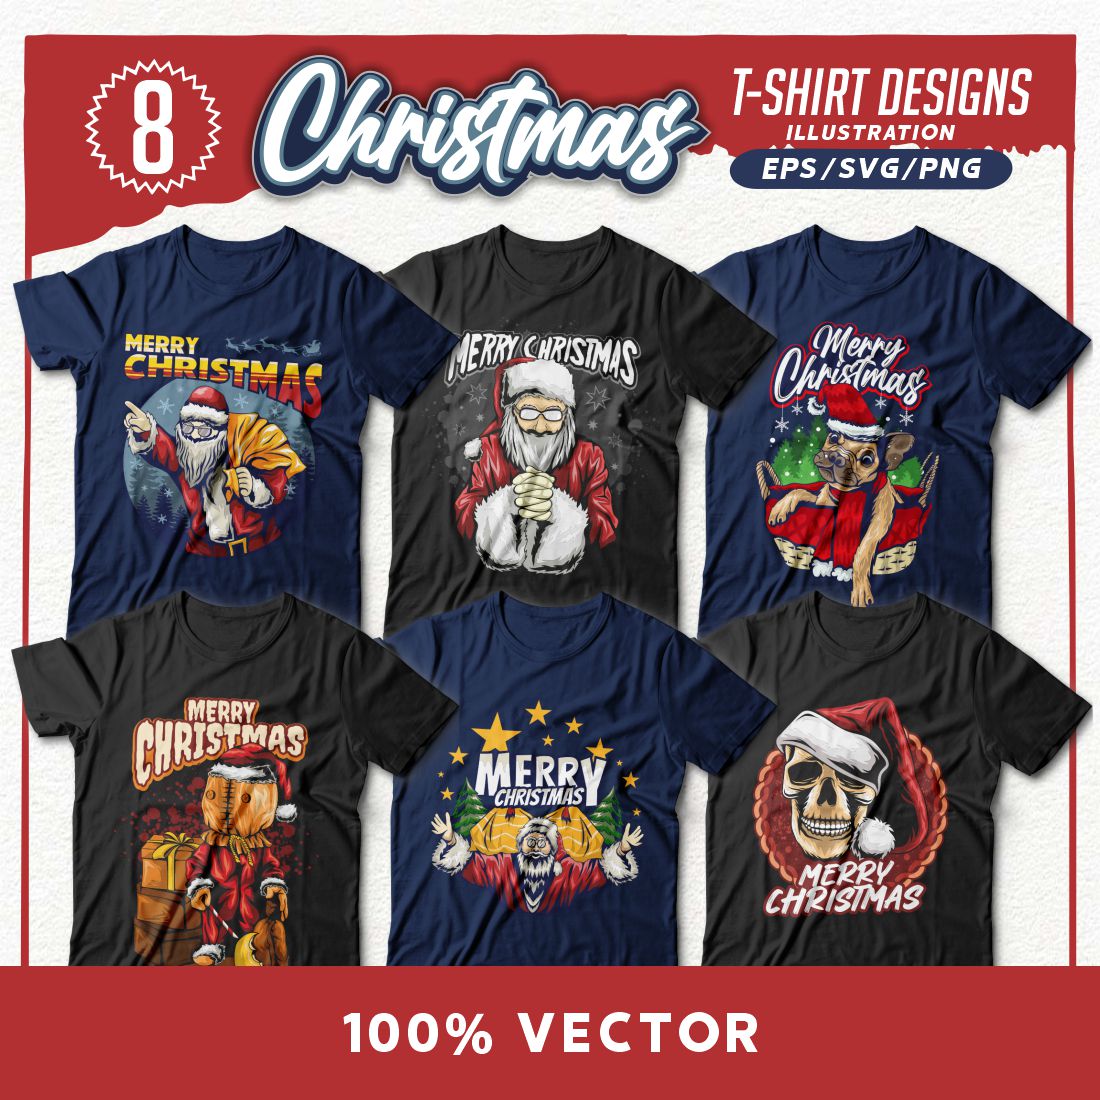 Christmas Illustration Vector T-shirt Designs Bundle cover image.